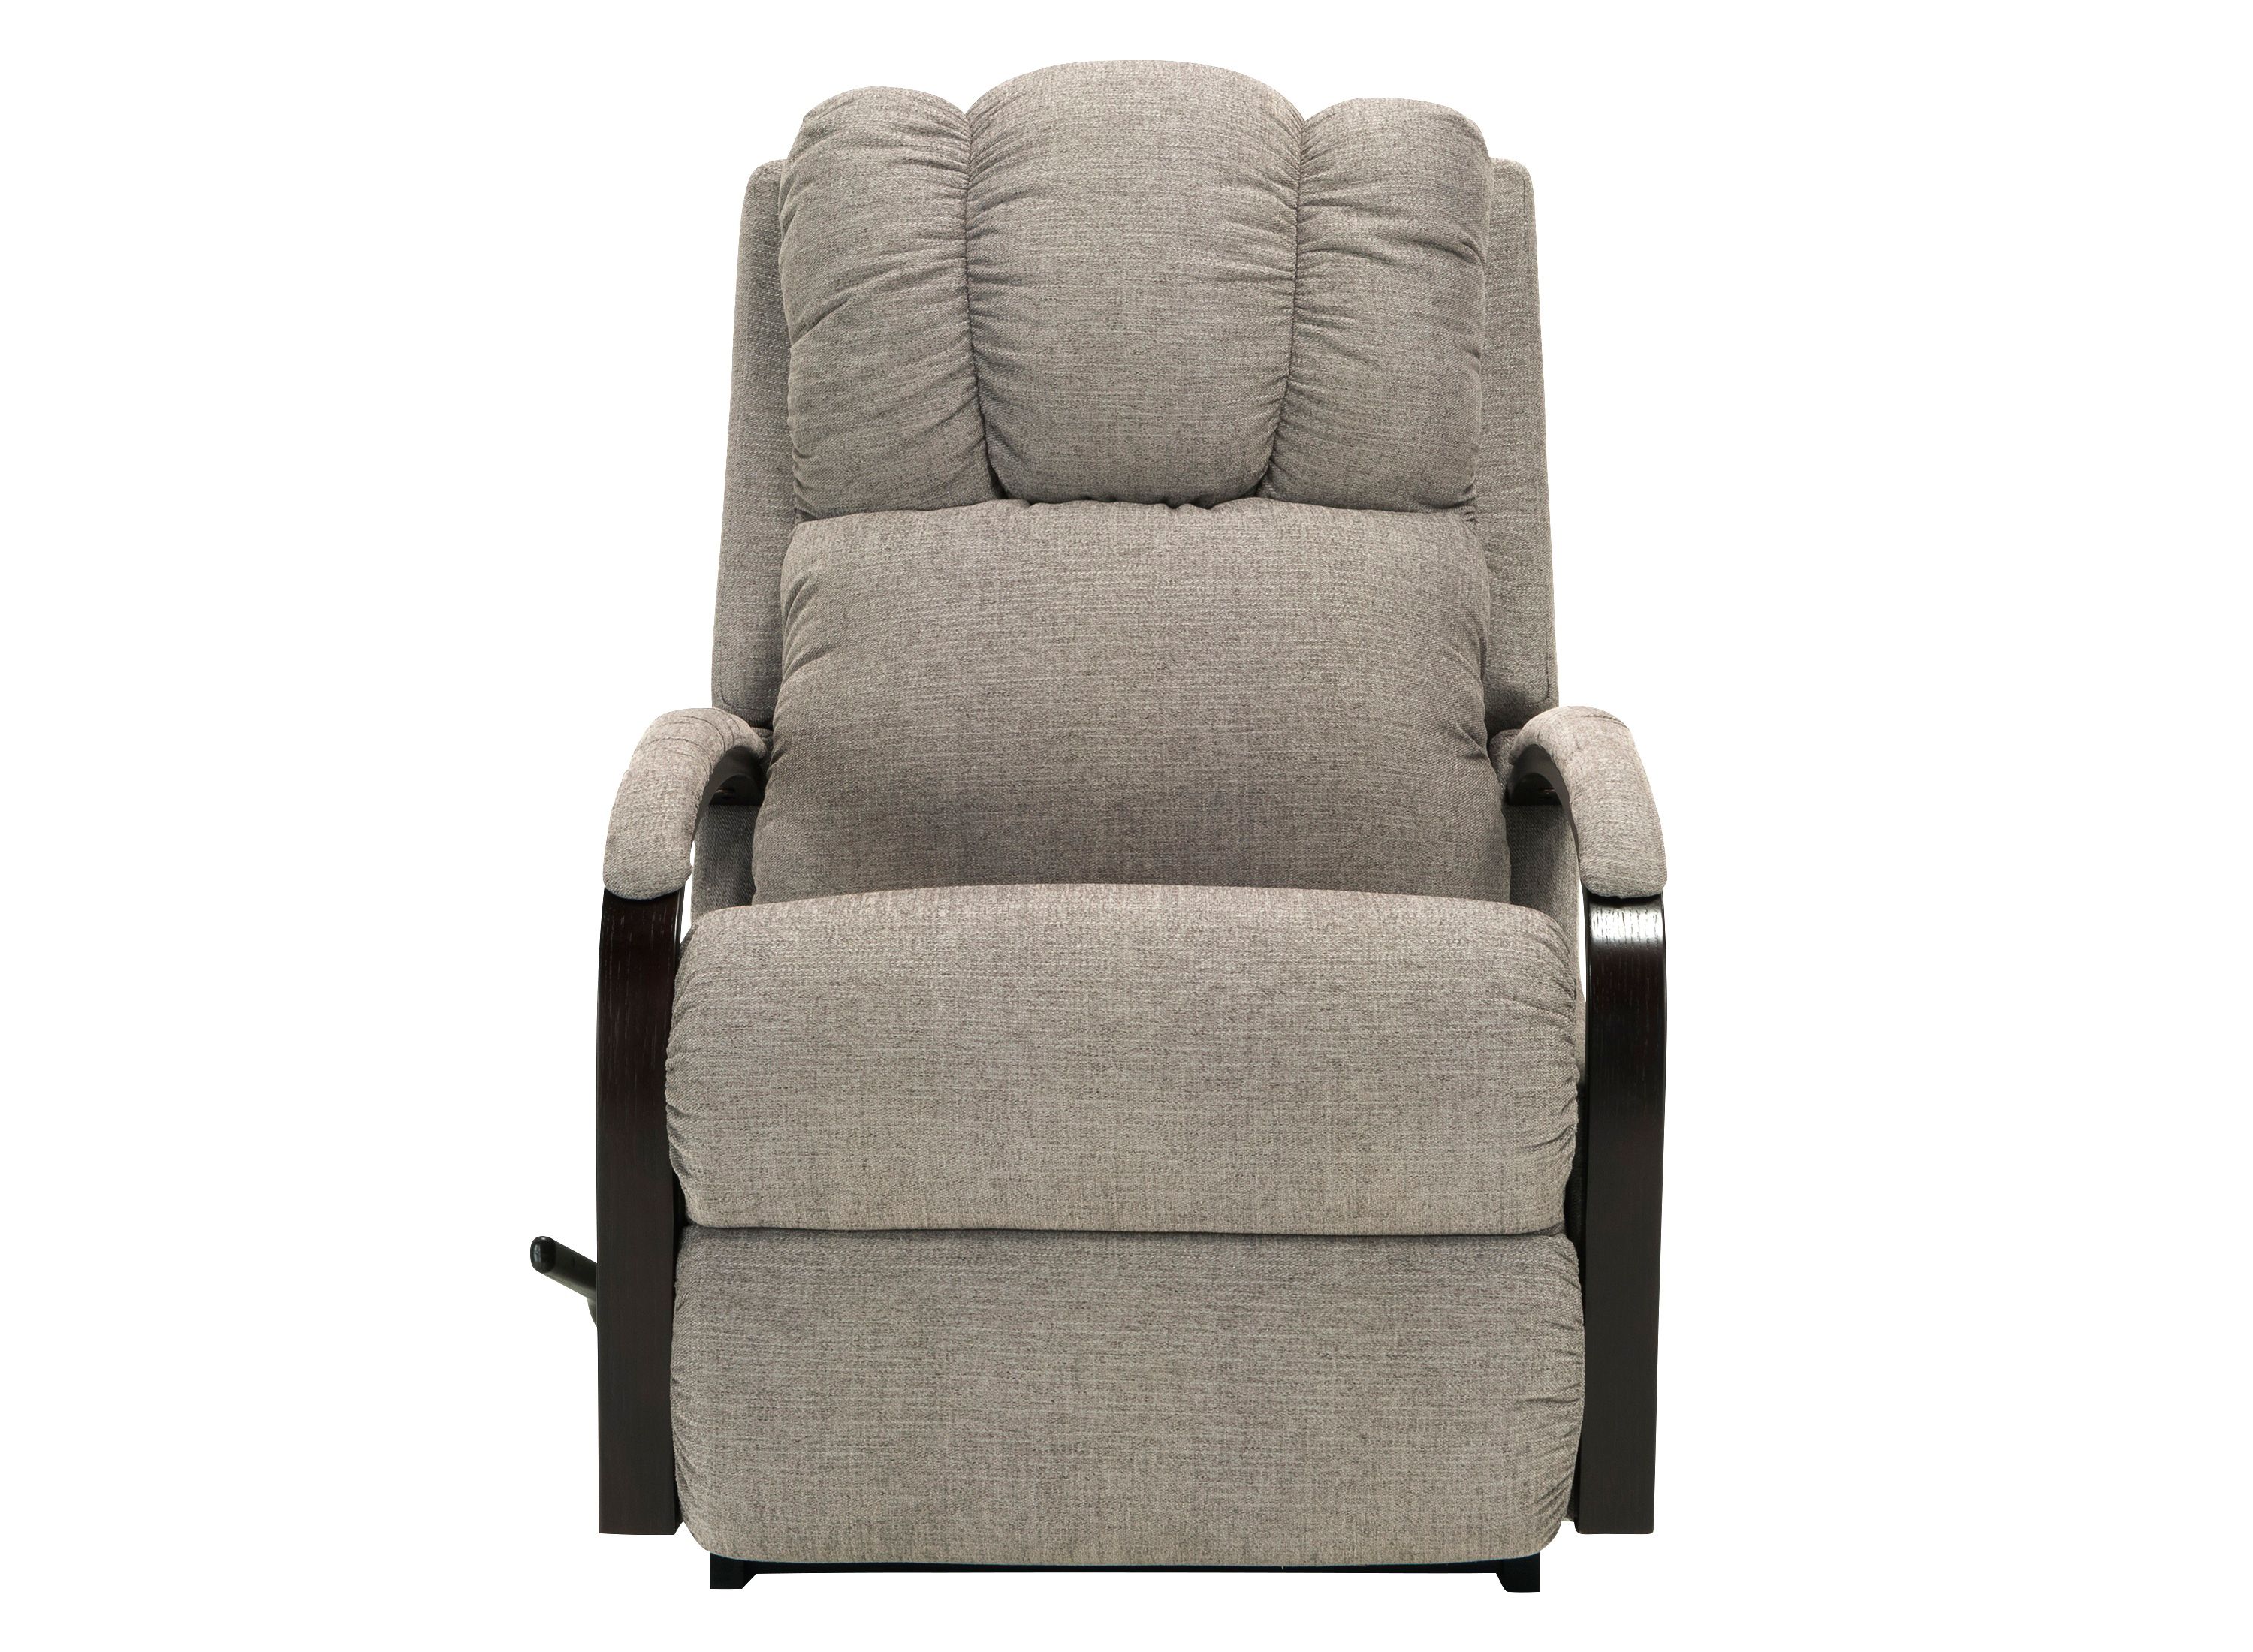 23 Long La Z Boy Spring Cushion Reclina Recliner Seat Support Lazy sit  repair